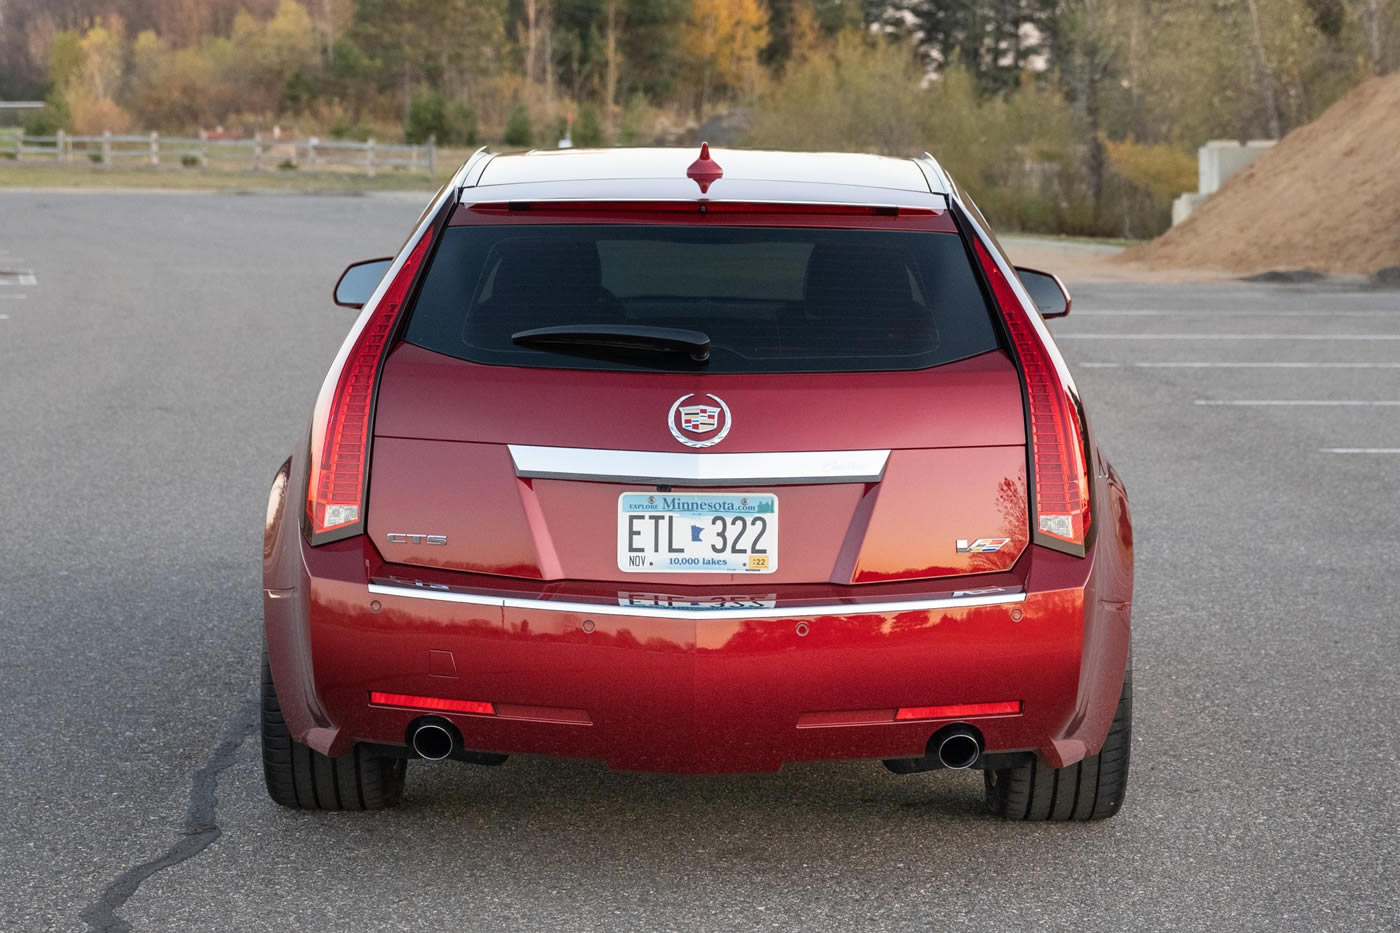 2013 Cadillac CTS-V Wagon in Crystal Red Tintcoat